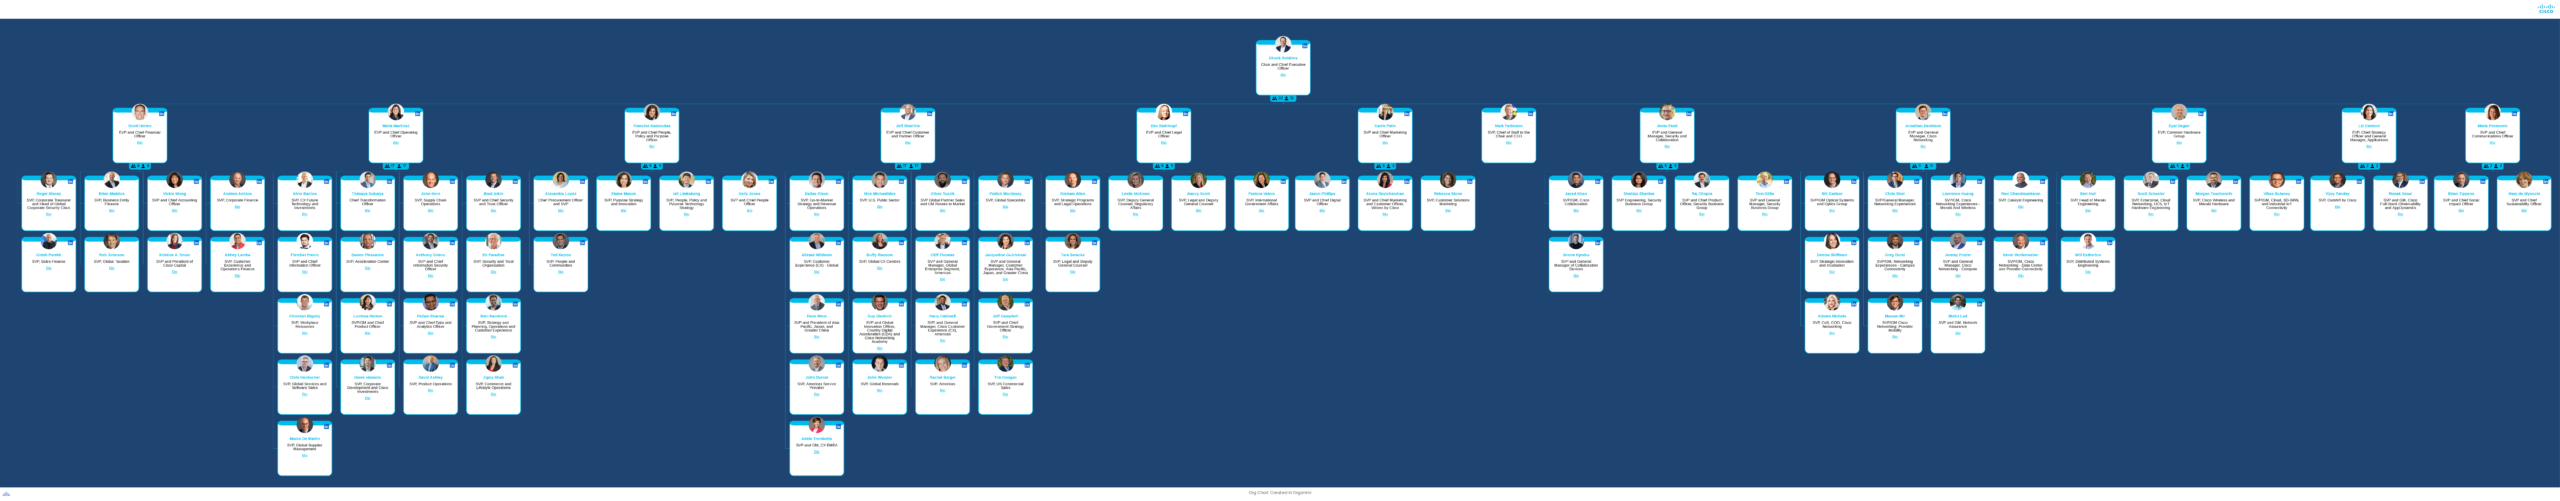 Cisco's Organizational Structure Chart